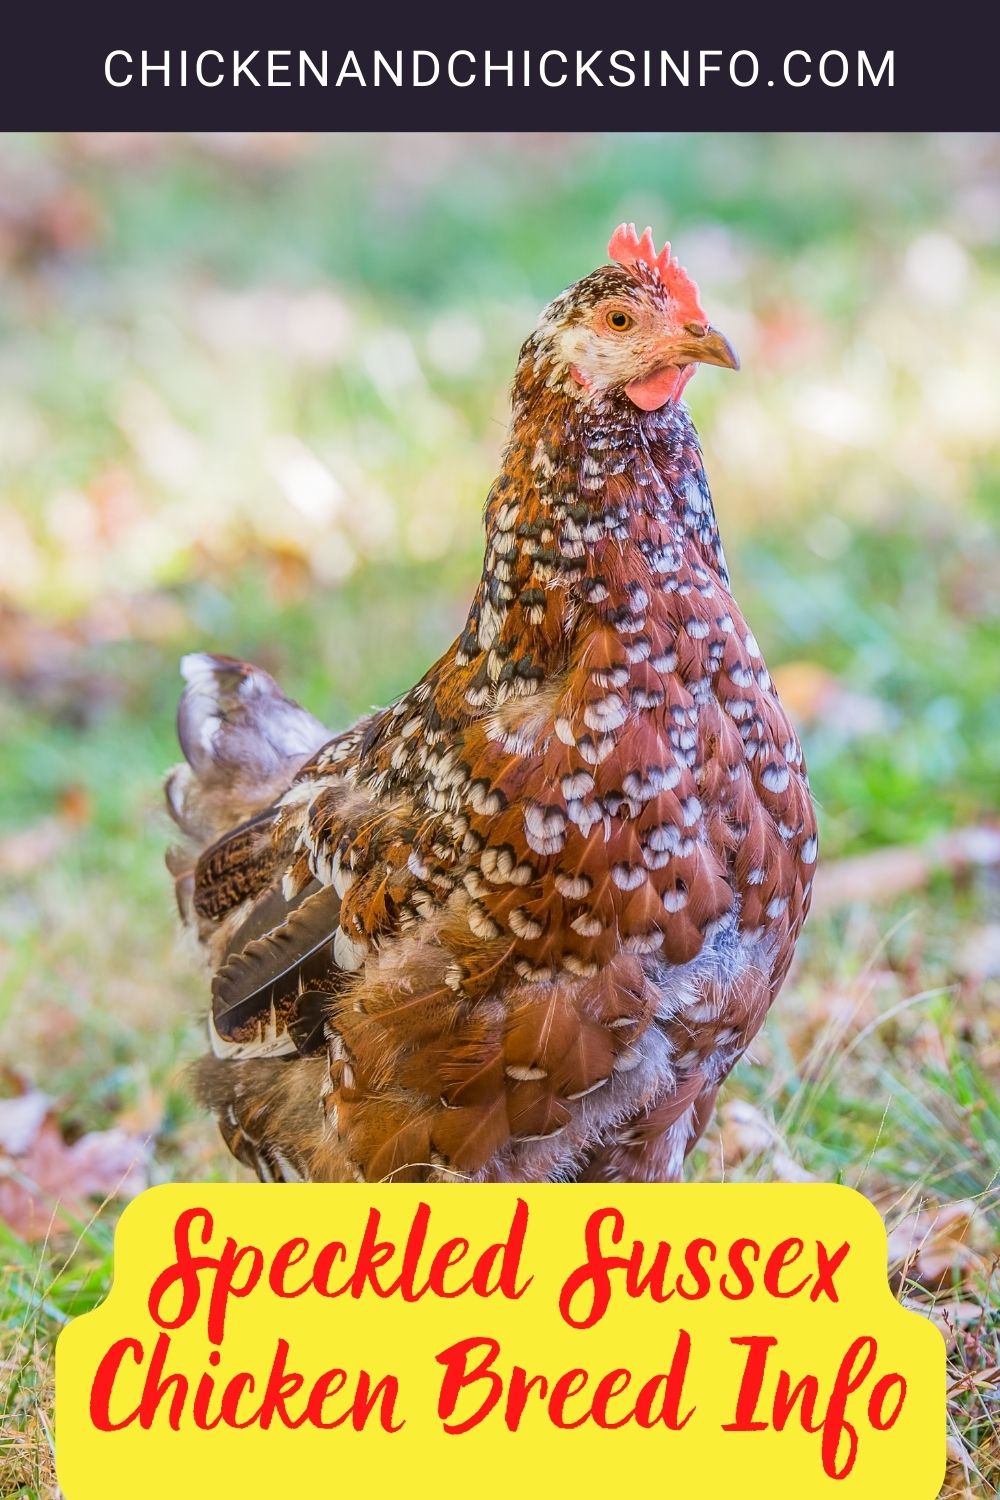 Speckled Sussex Chicken Breed Info pinterest image.